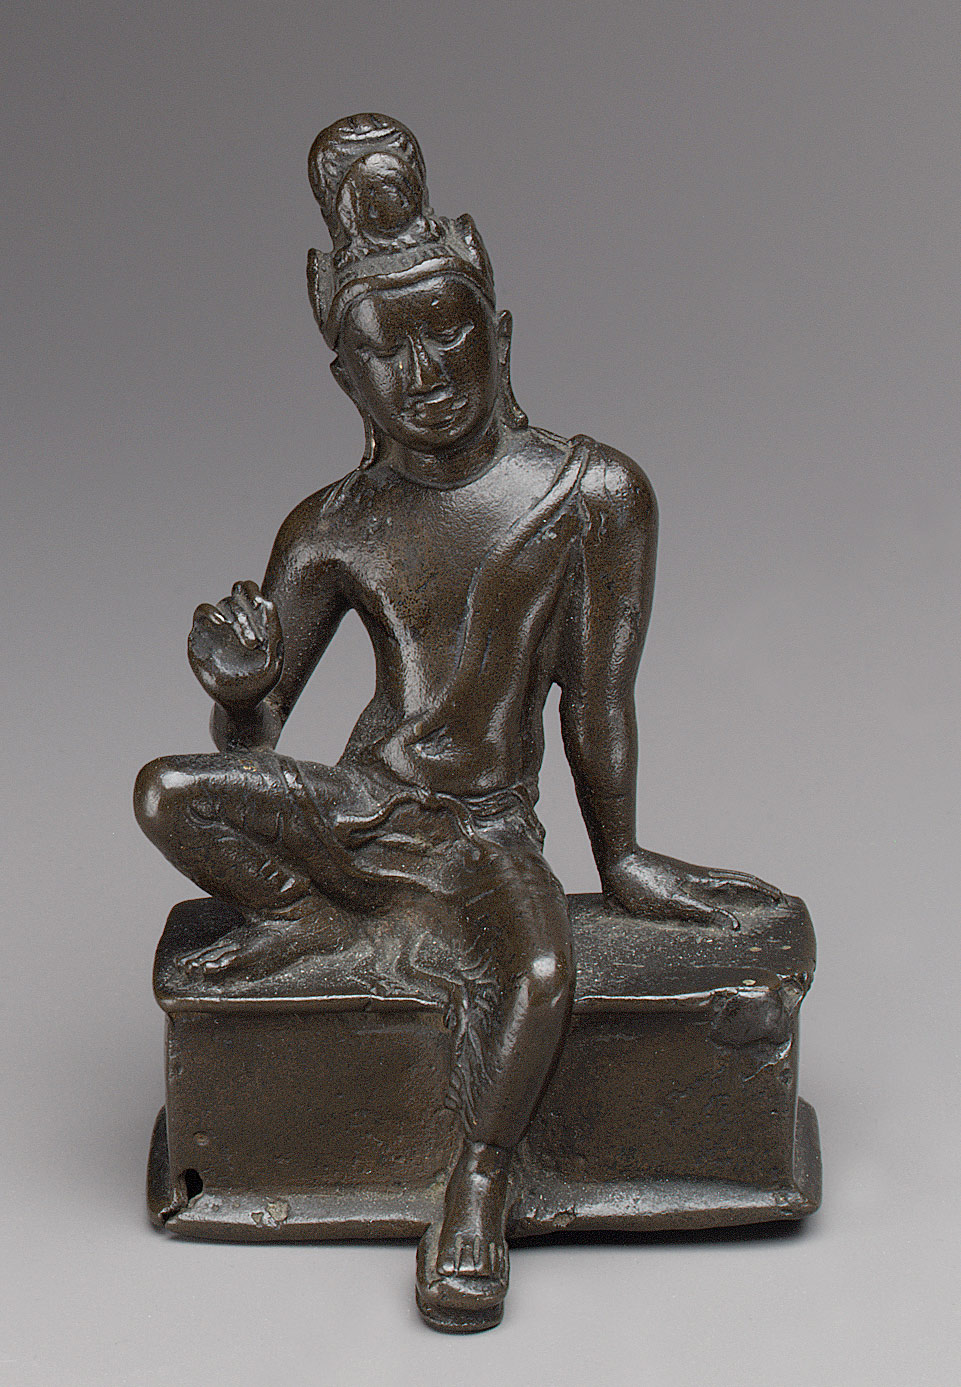 Seated Avalokiteshvara, the Bodhisattva of Infinite Compassion